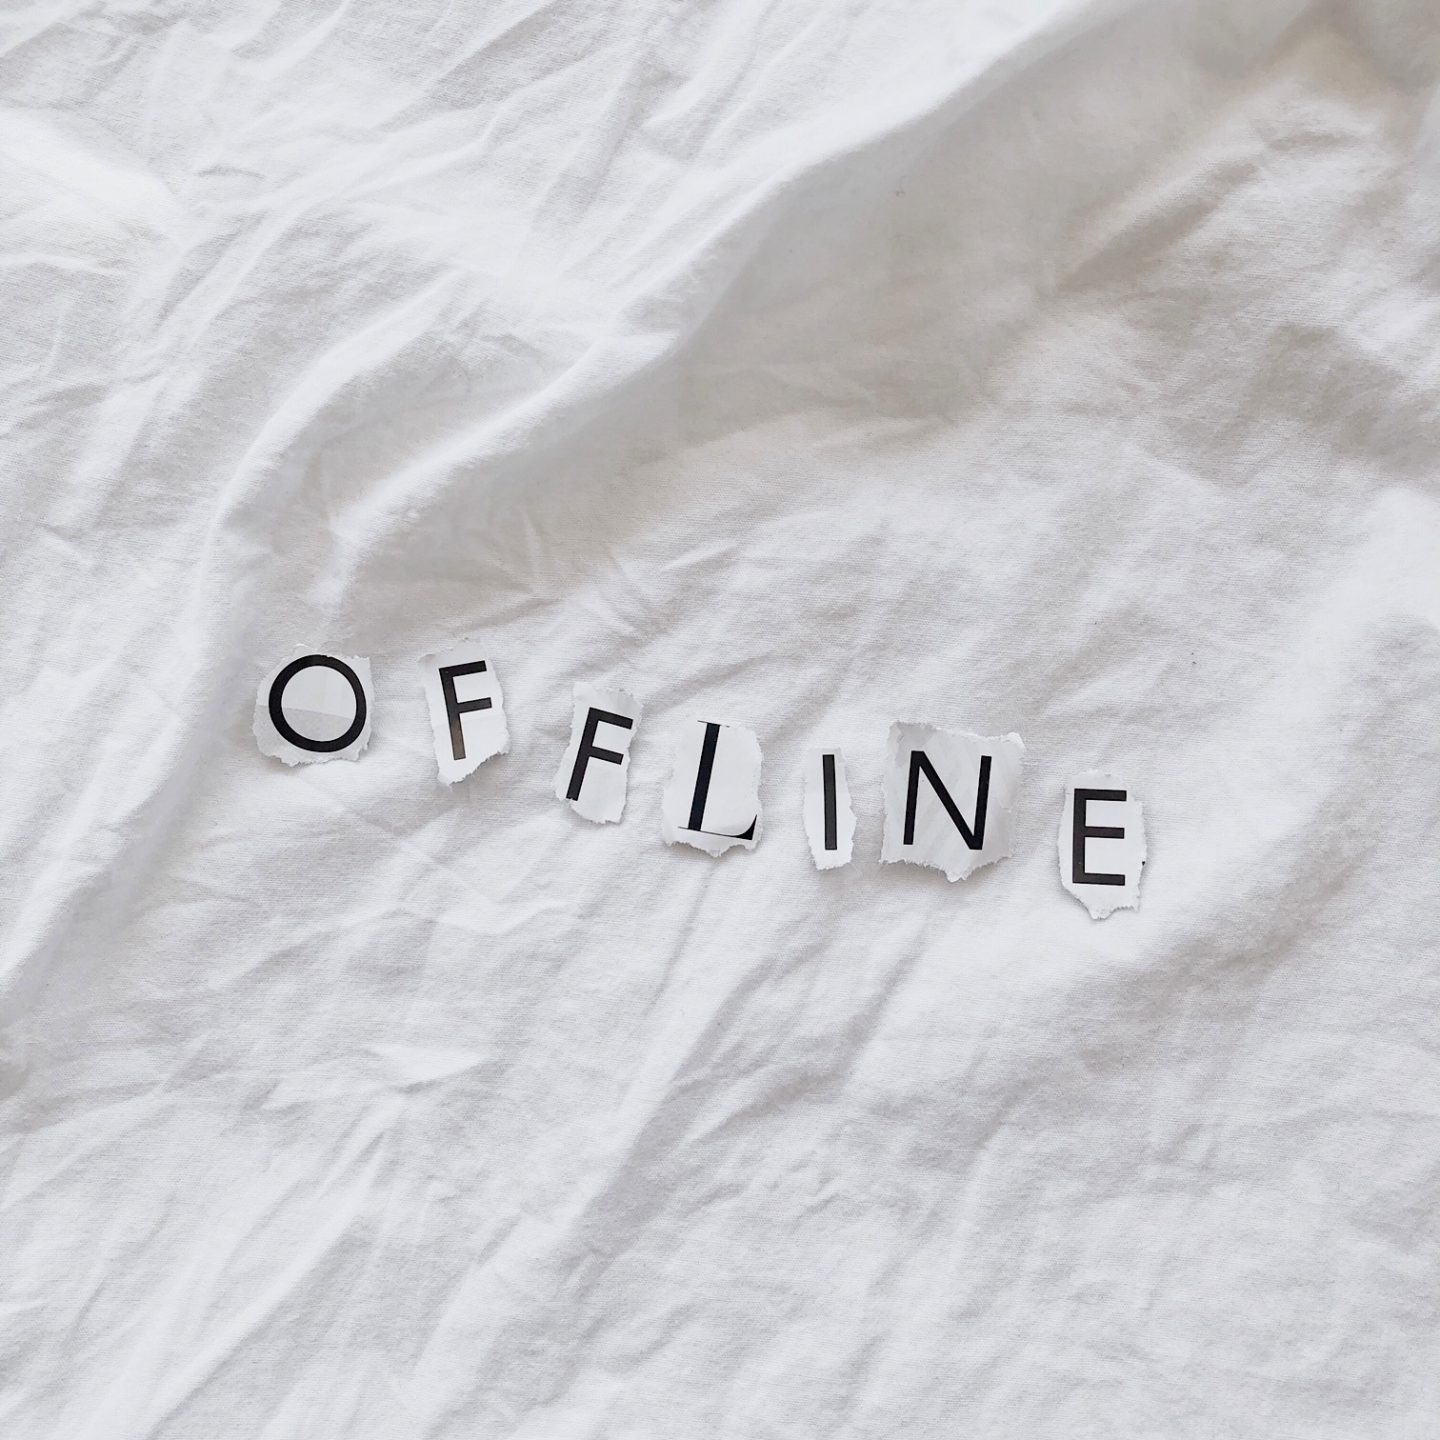 Offline text